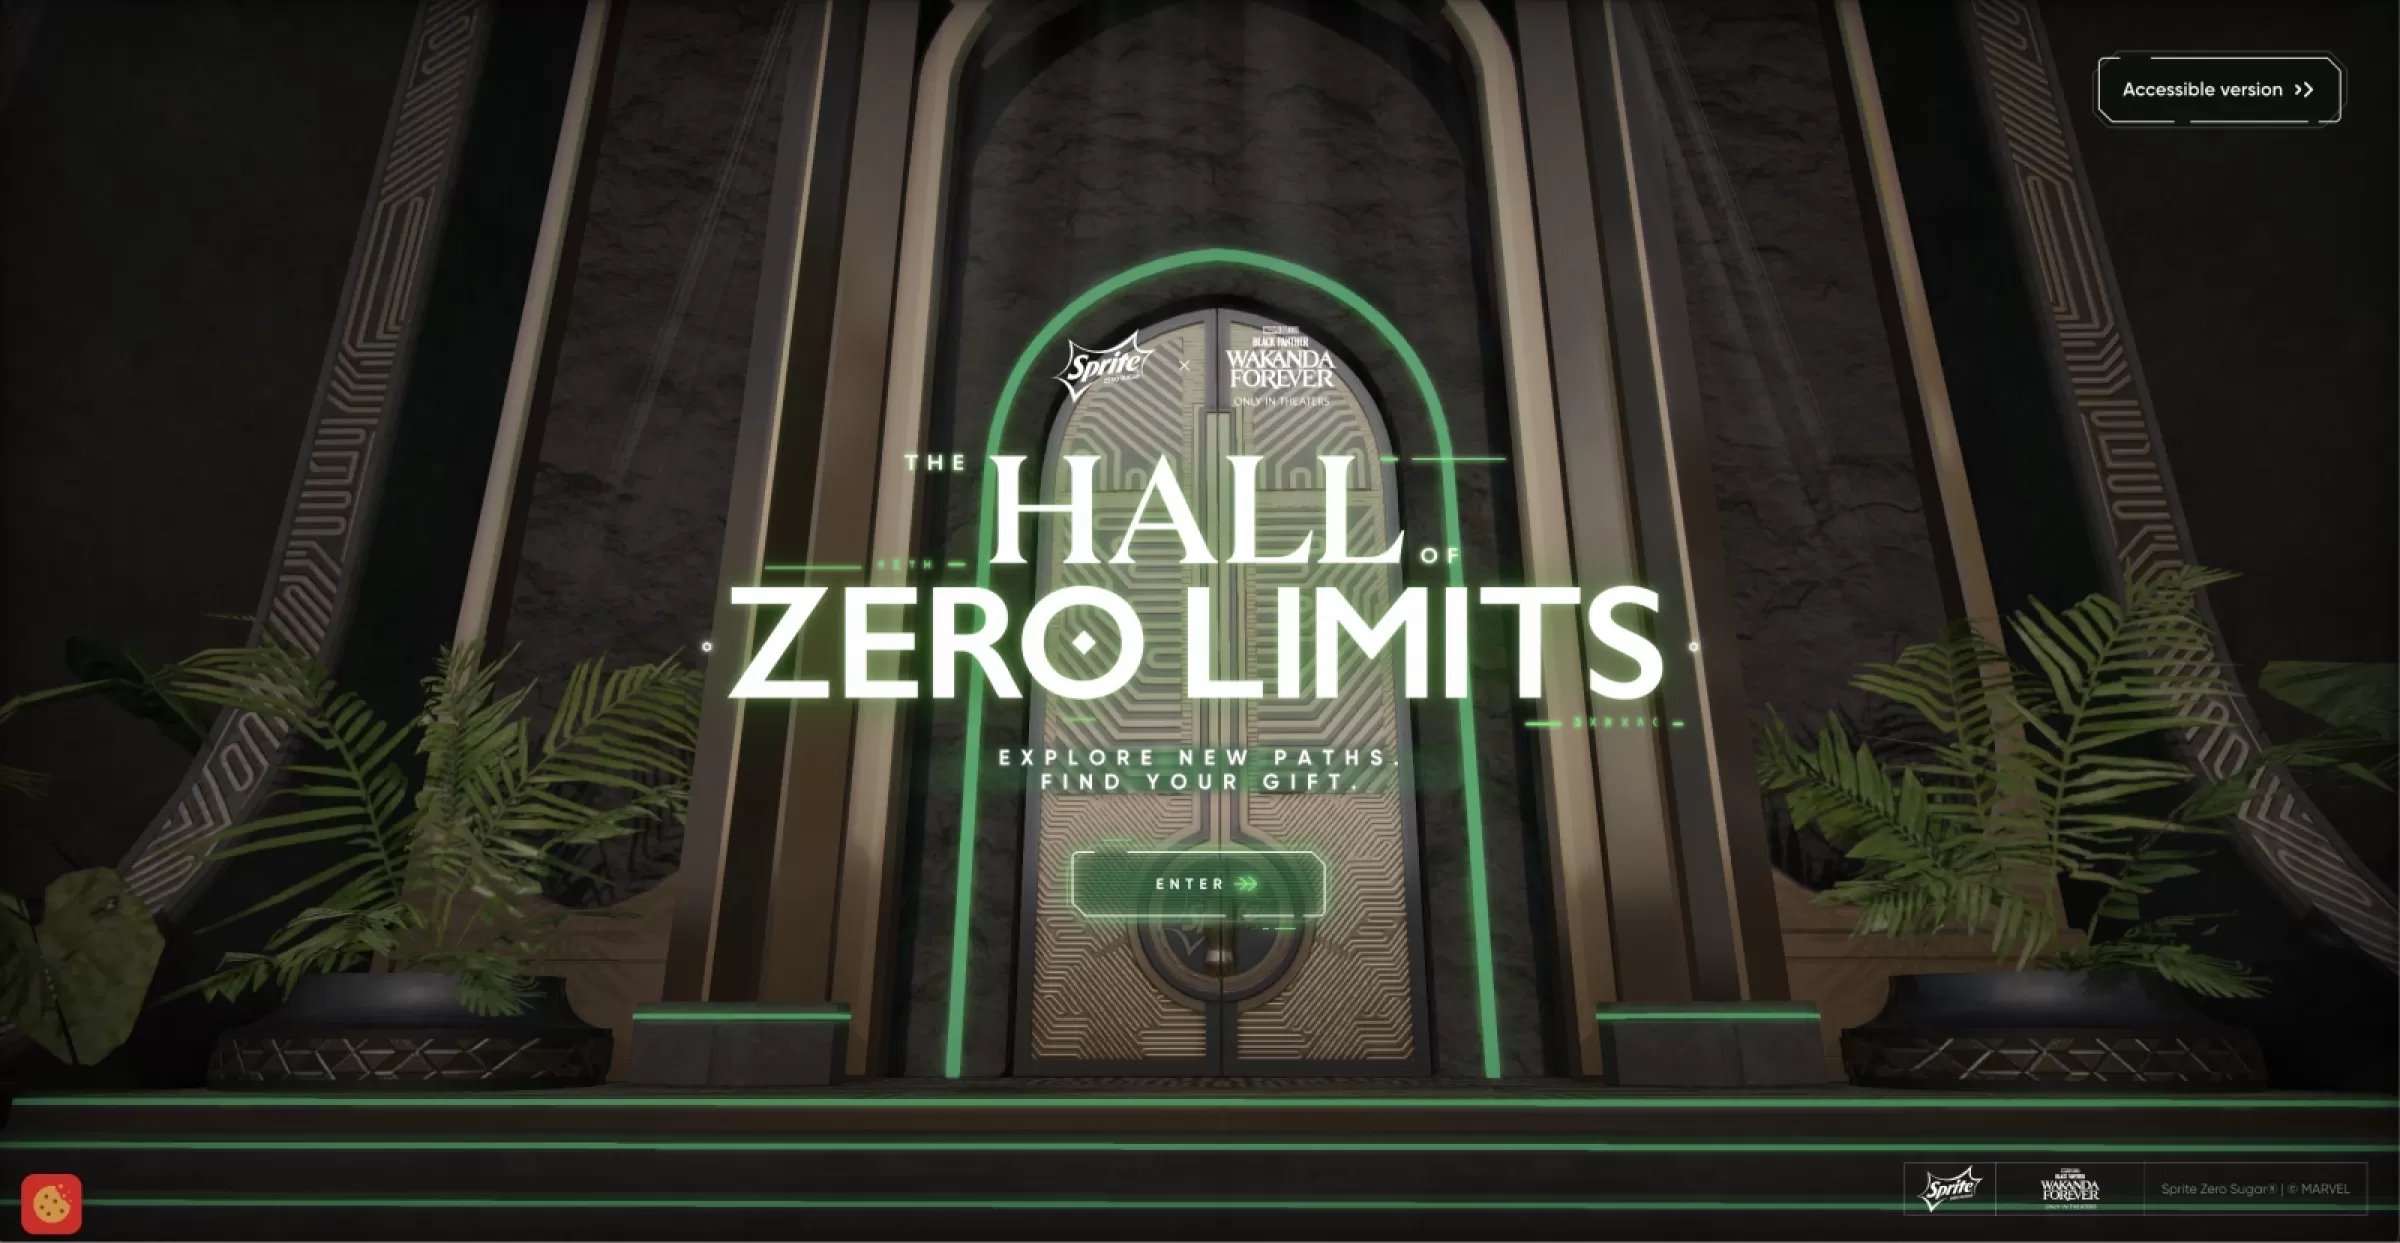 The Hall of Zero Limits